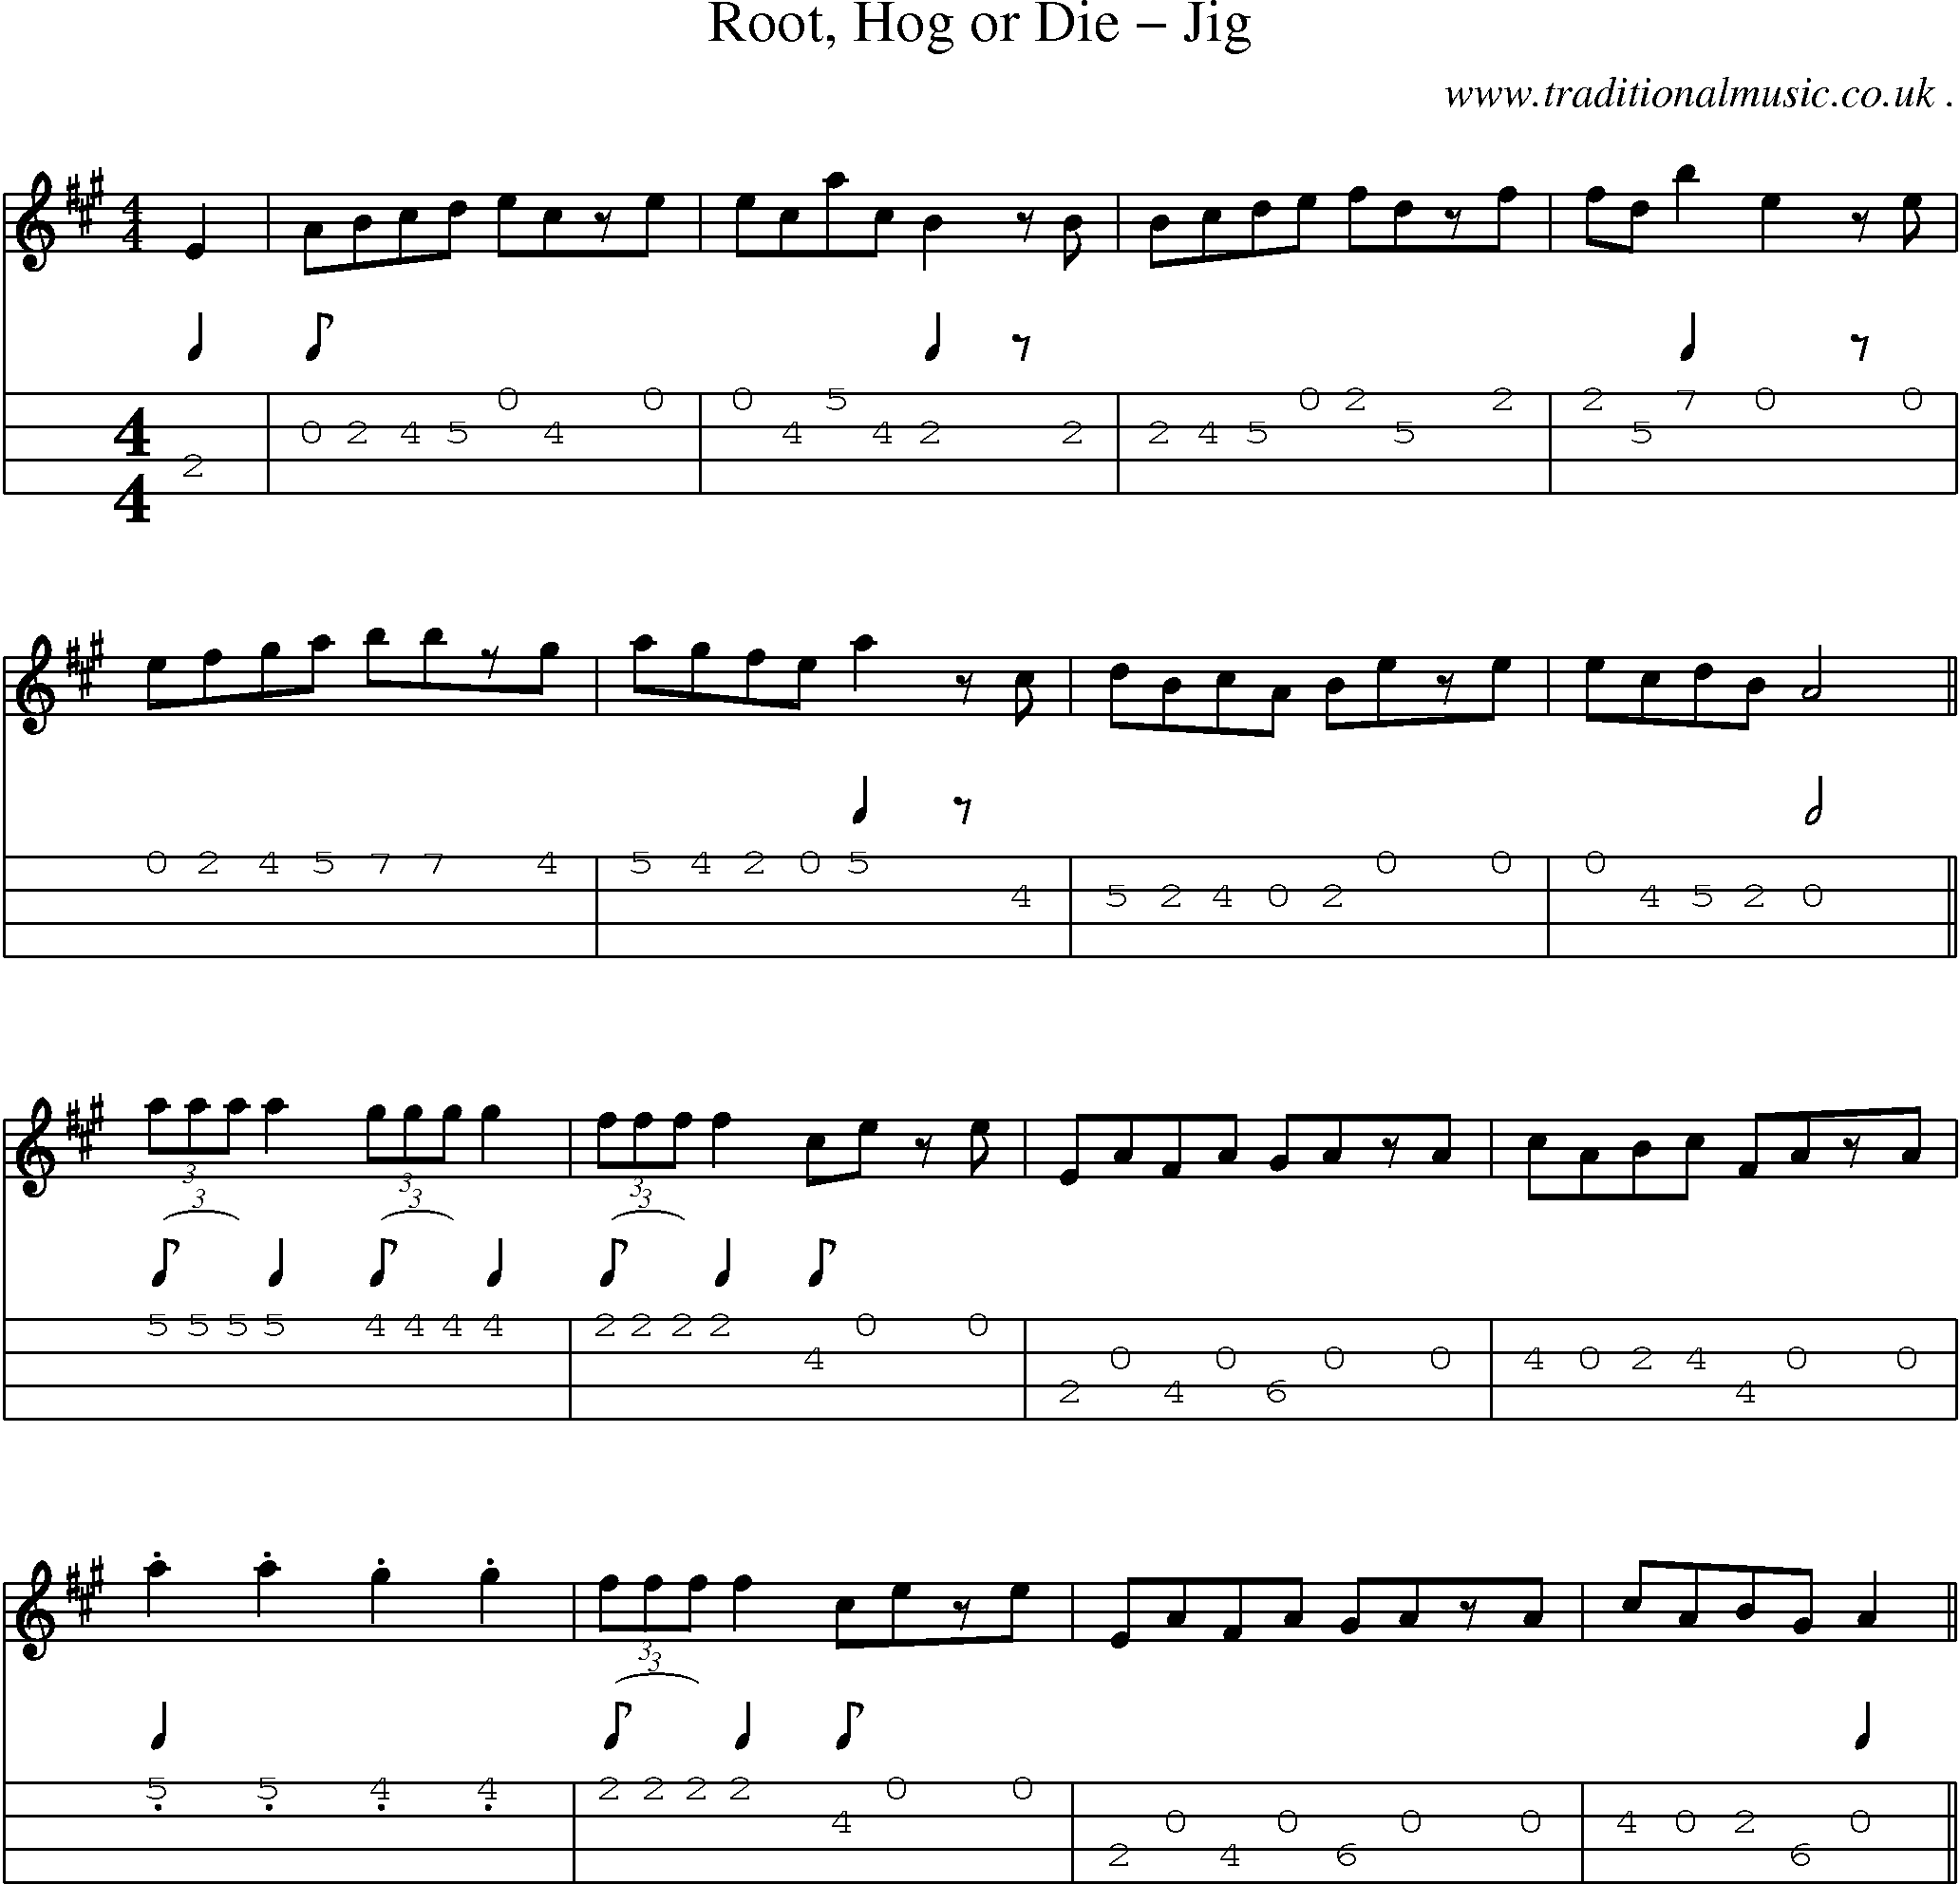 Music Score and Guitar Tabs for Root Hog Or Die Jig